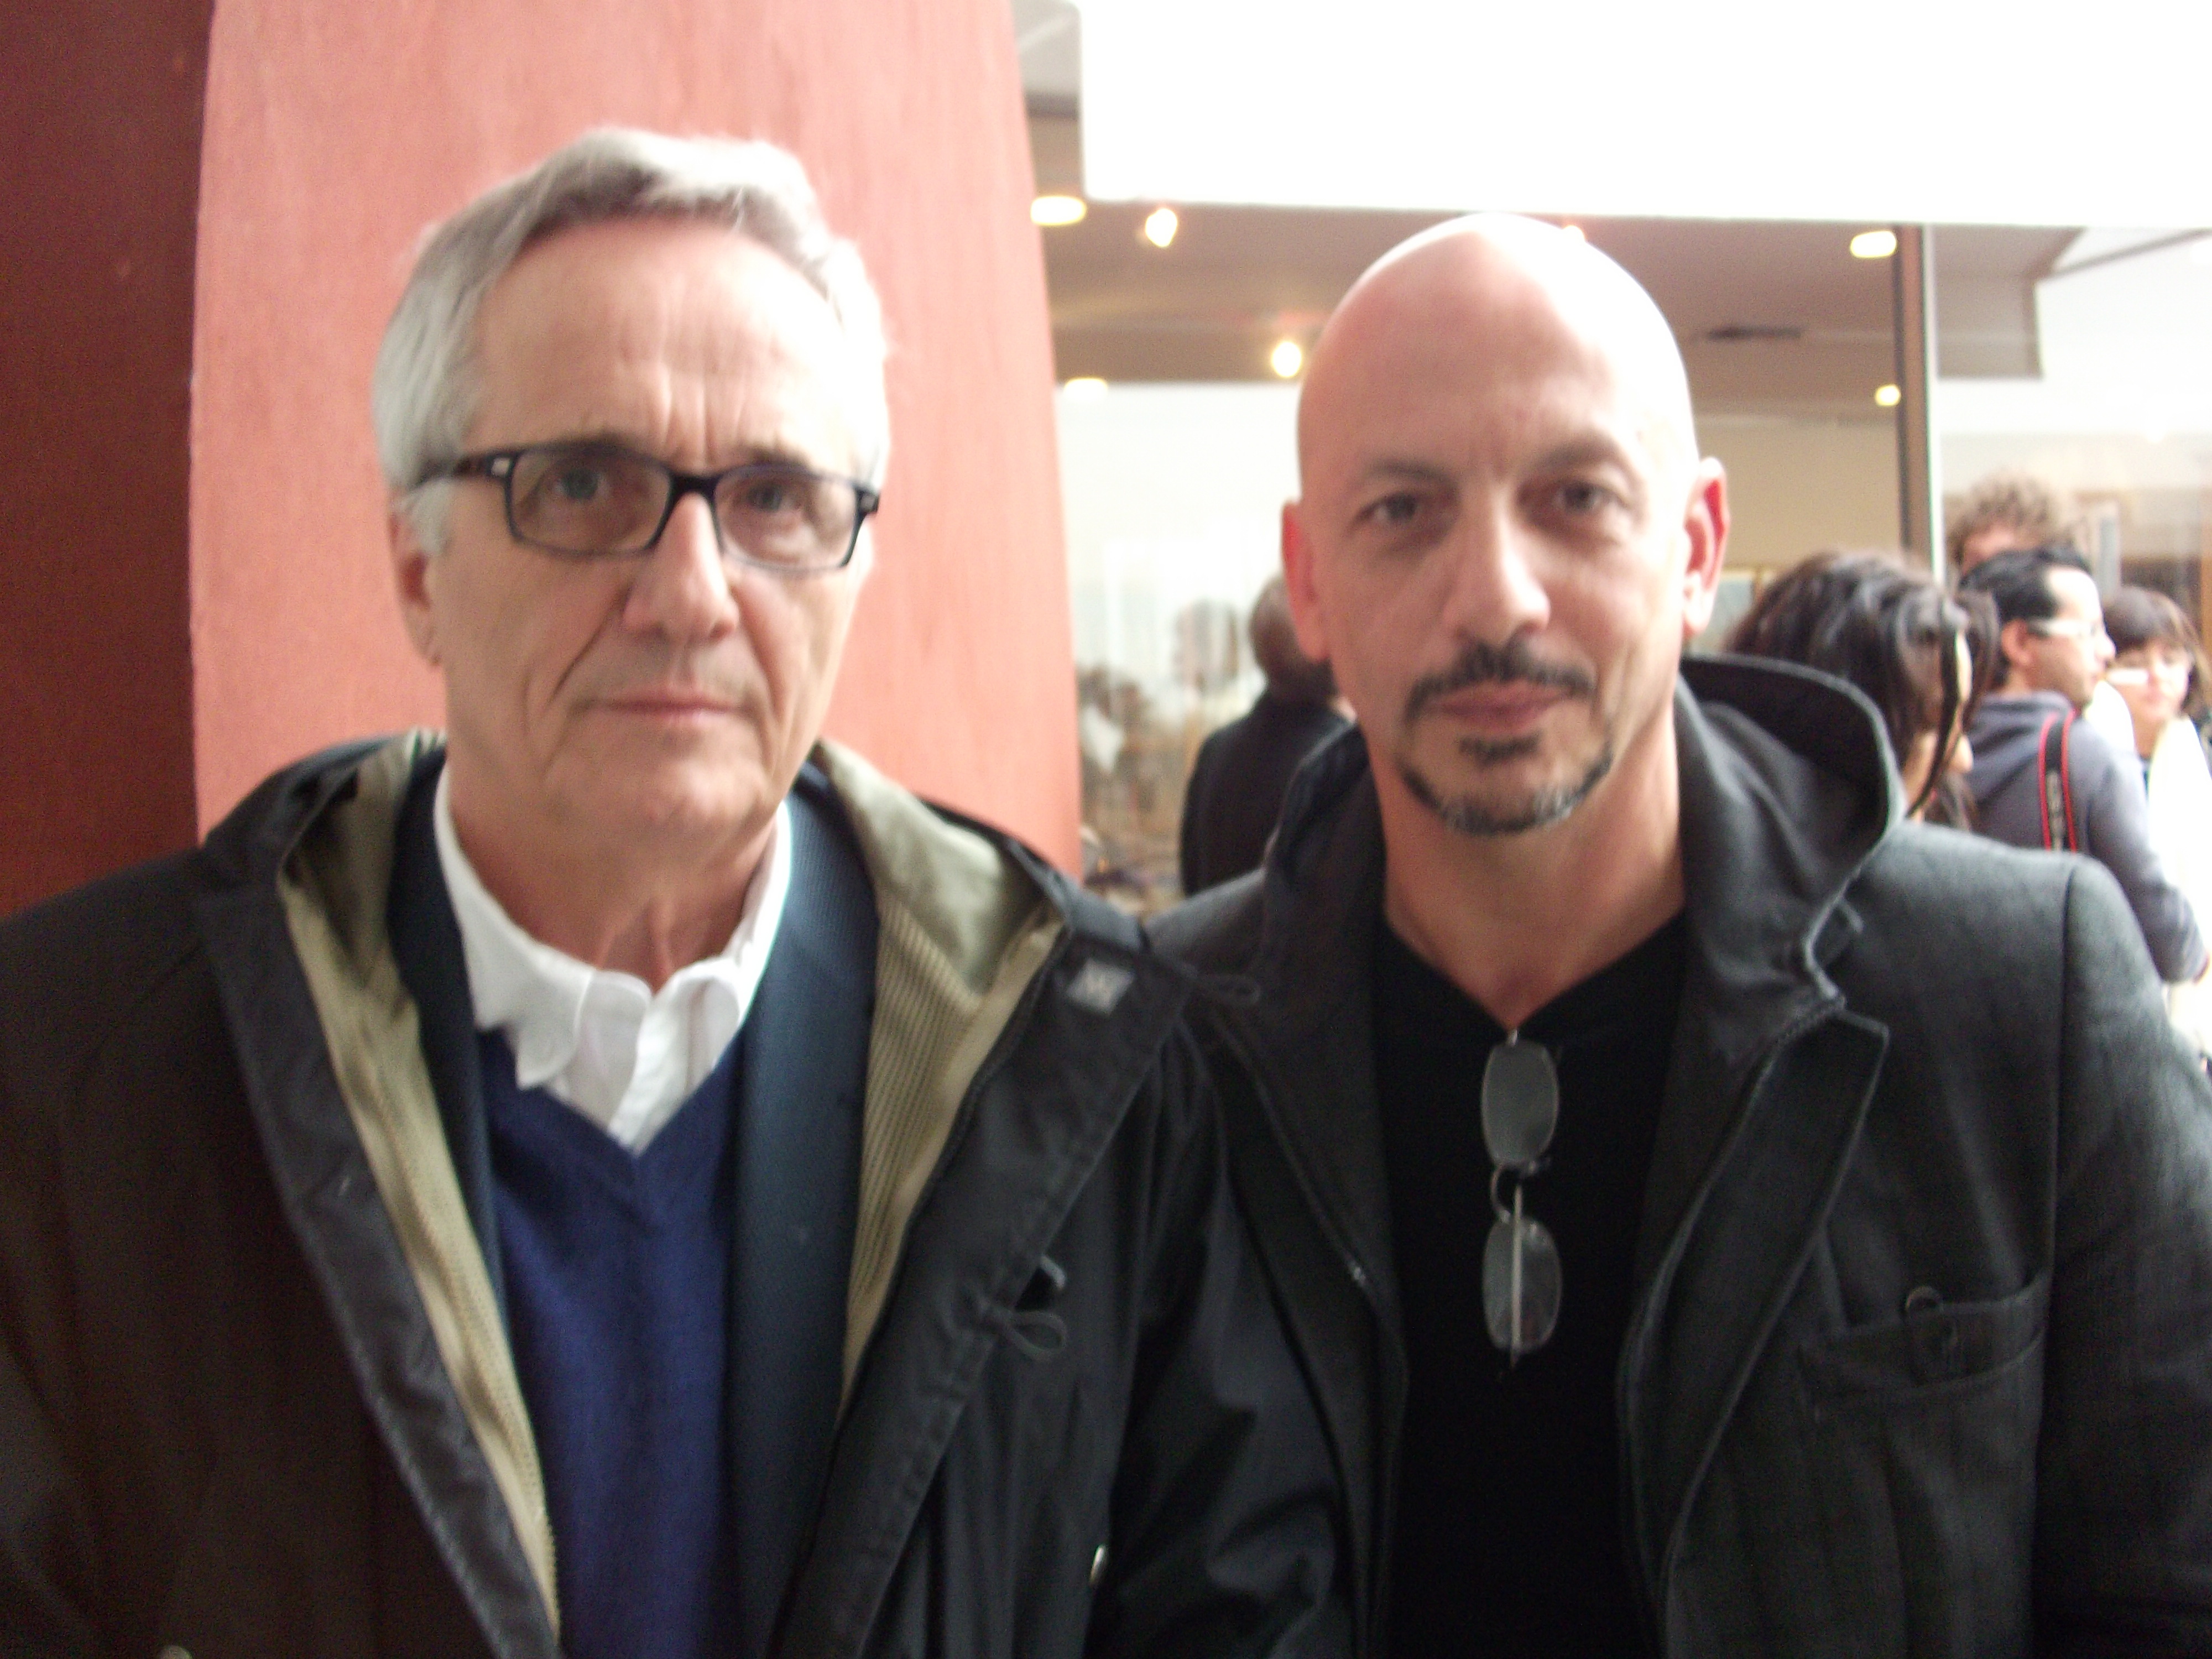 Film directors Marco Bellochio and Gianfranco Serraino . Los Angeles, February 2011.